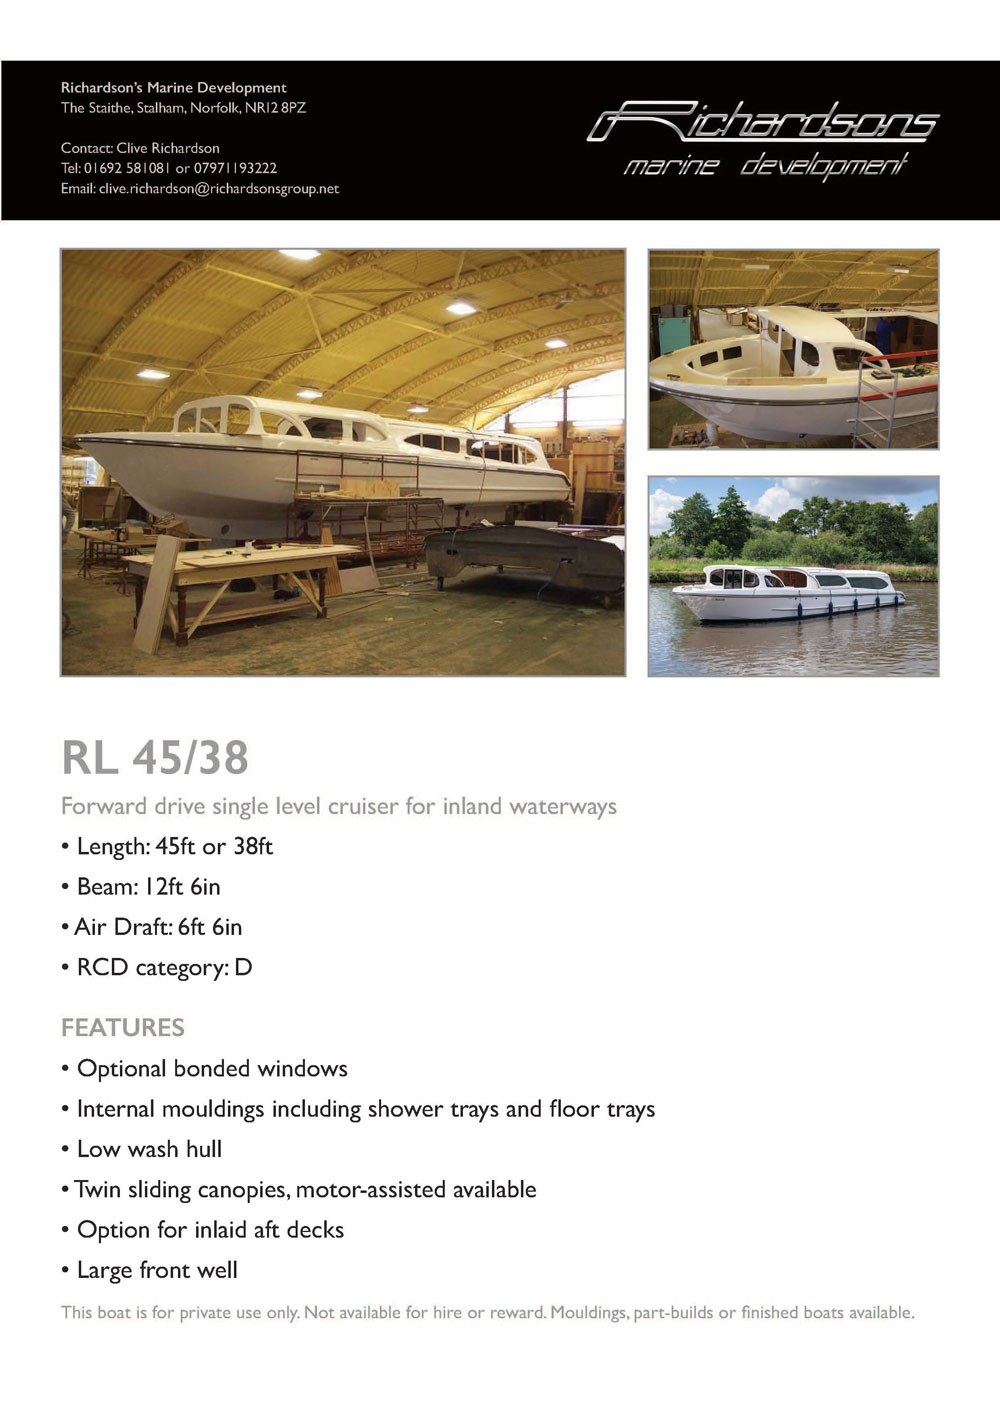 RL 45/38 Forward drive single level cruiser for inland waterways